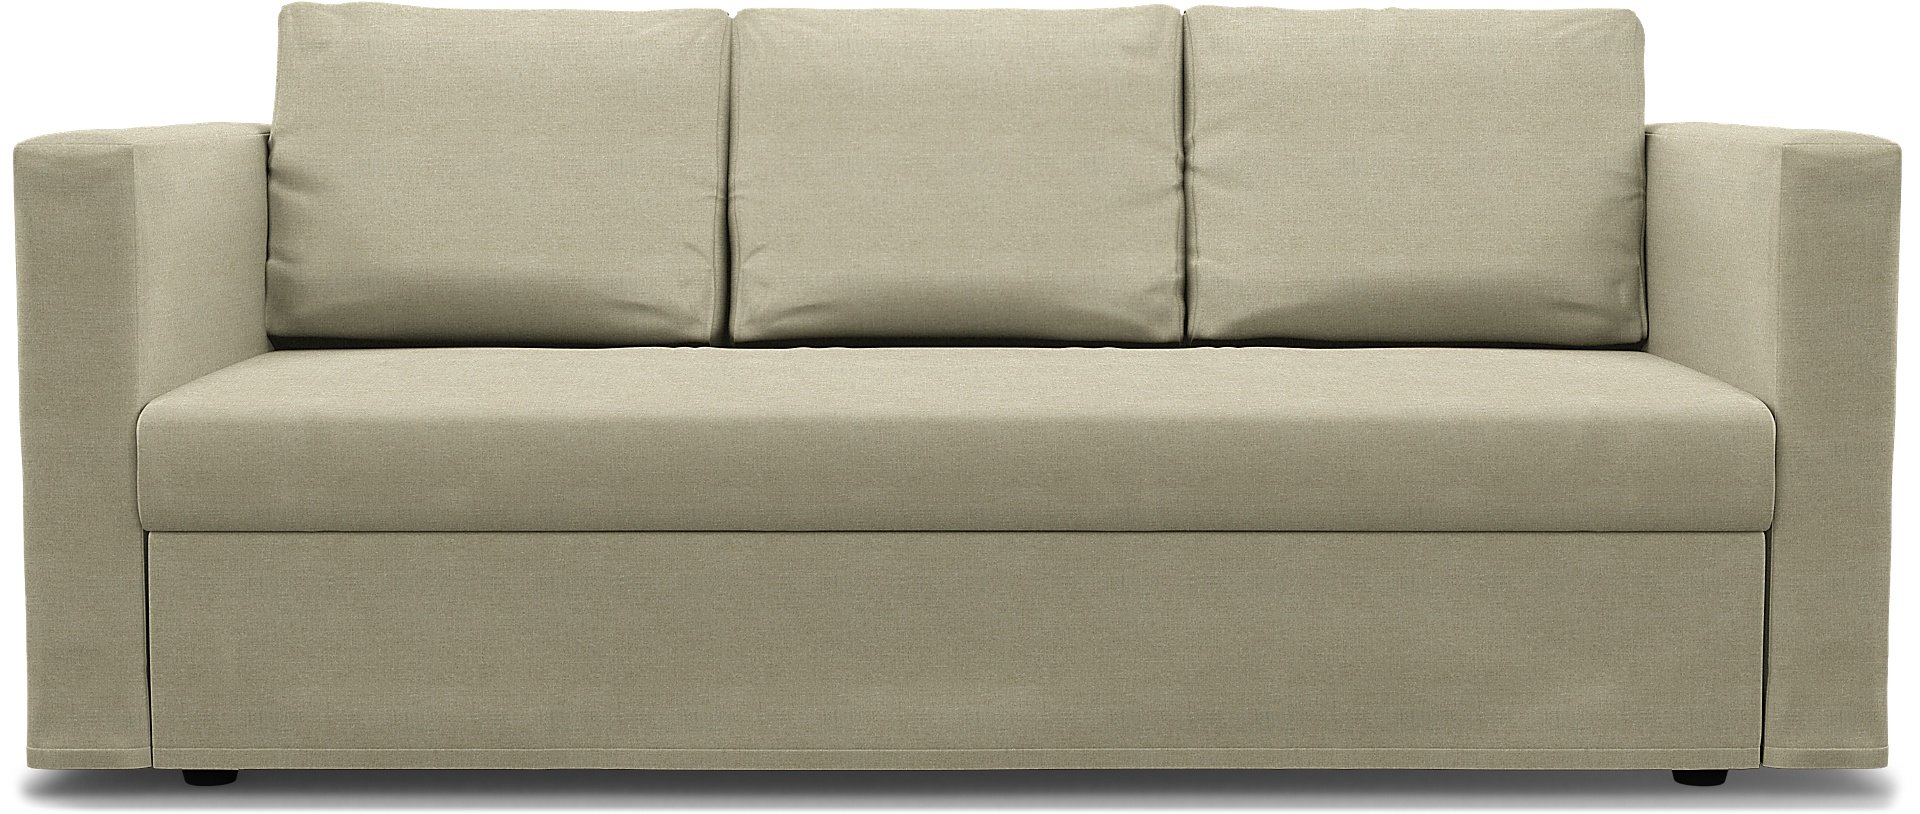 IKEA - Friheten 3 Seater Sofa Bed Cover, Pebble, Linen - Bemz